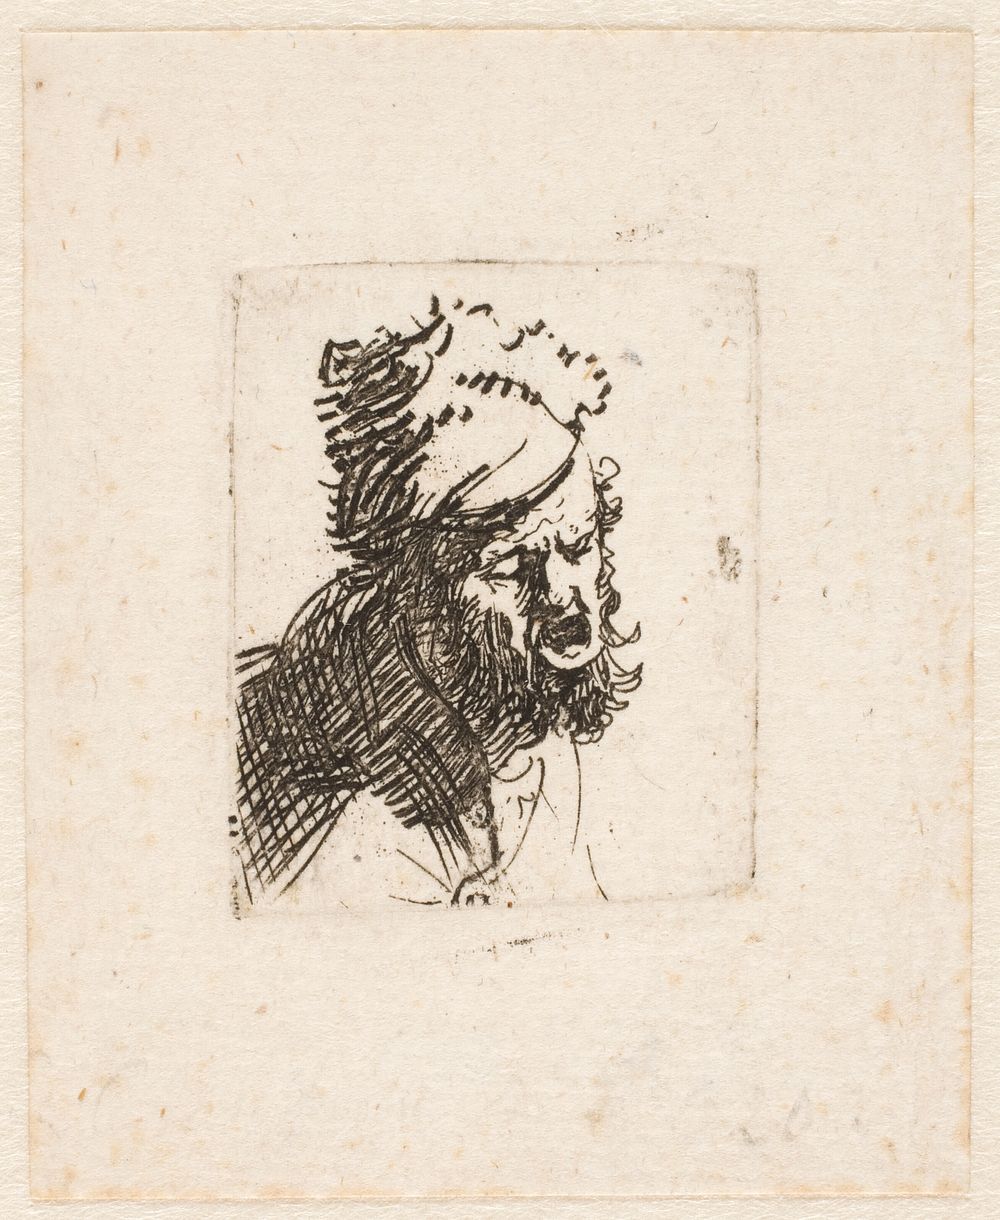 Head of shouting man with fur hat by Rembrandt van Rijn